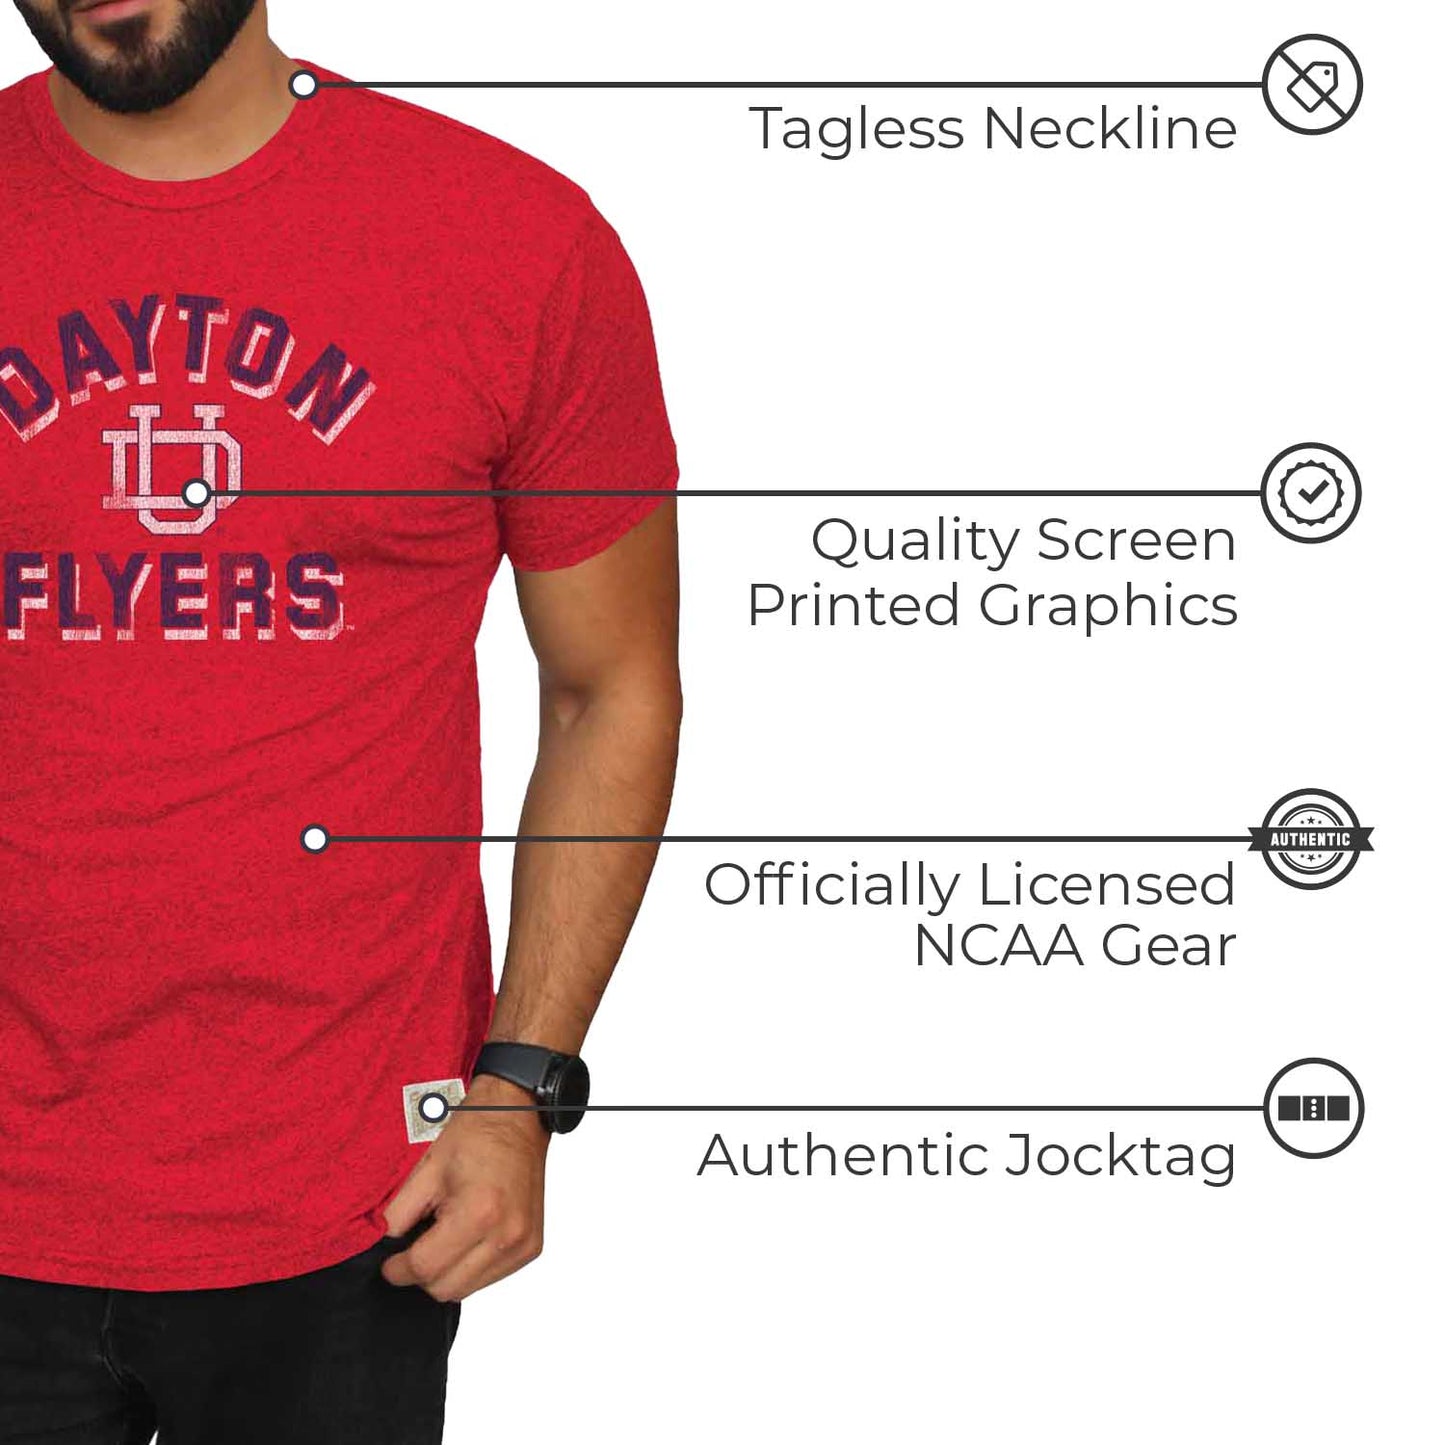 Dayton Flyers Dayton Flyers Adult College Team Color T-Shirt